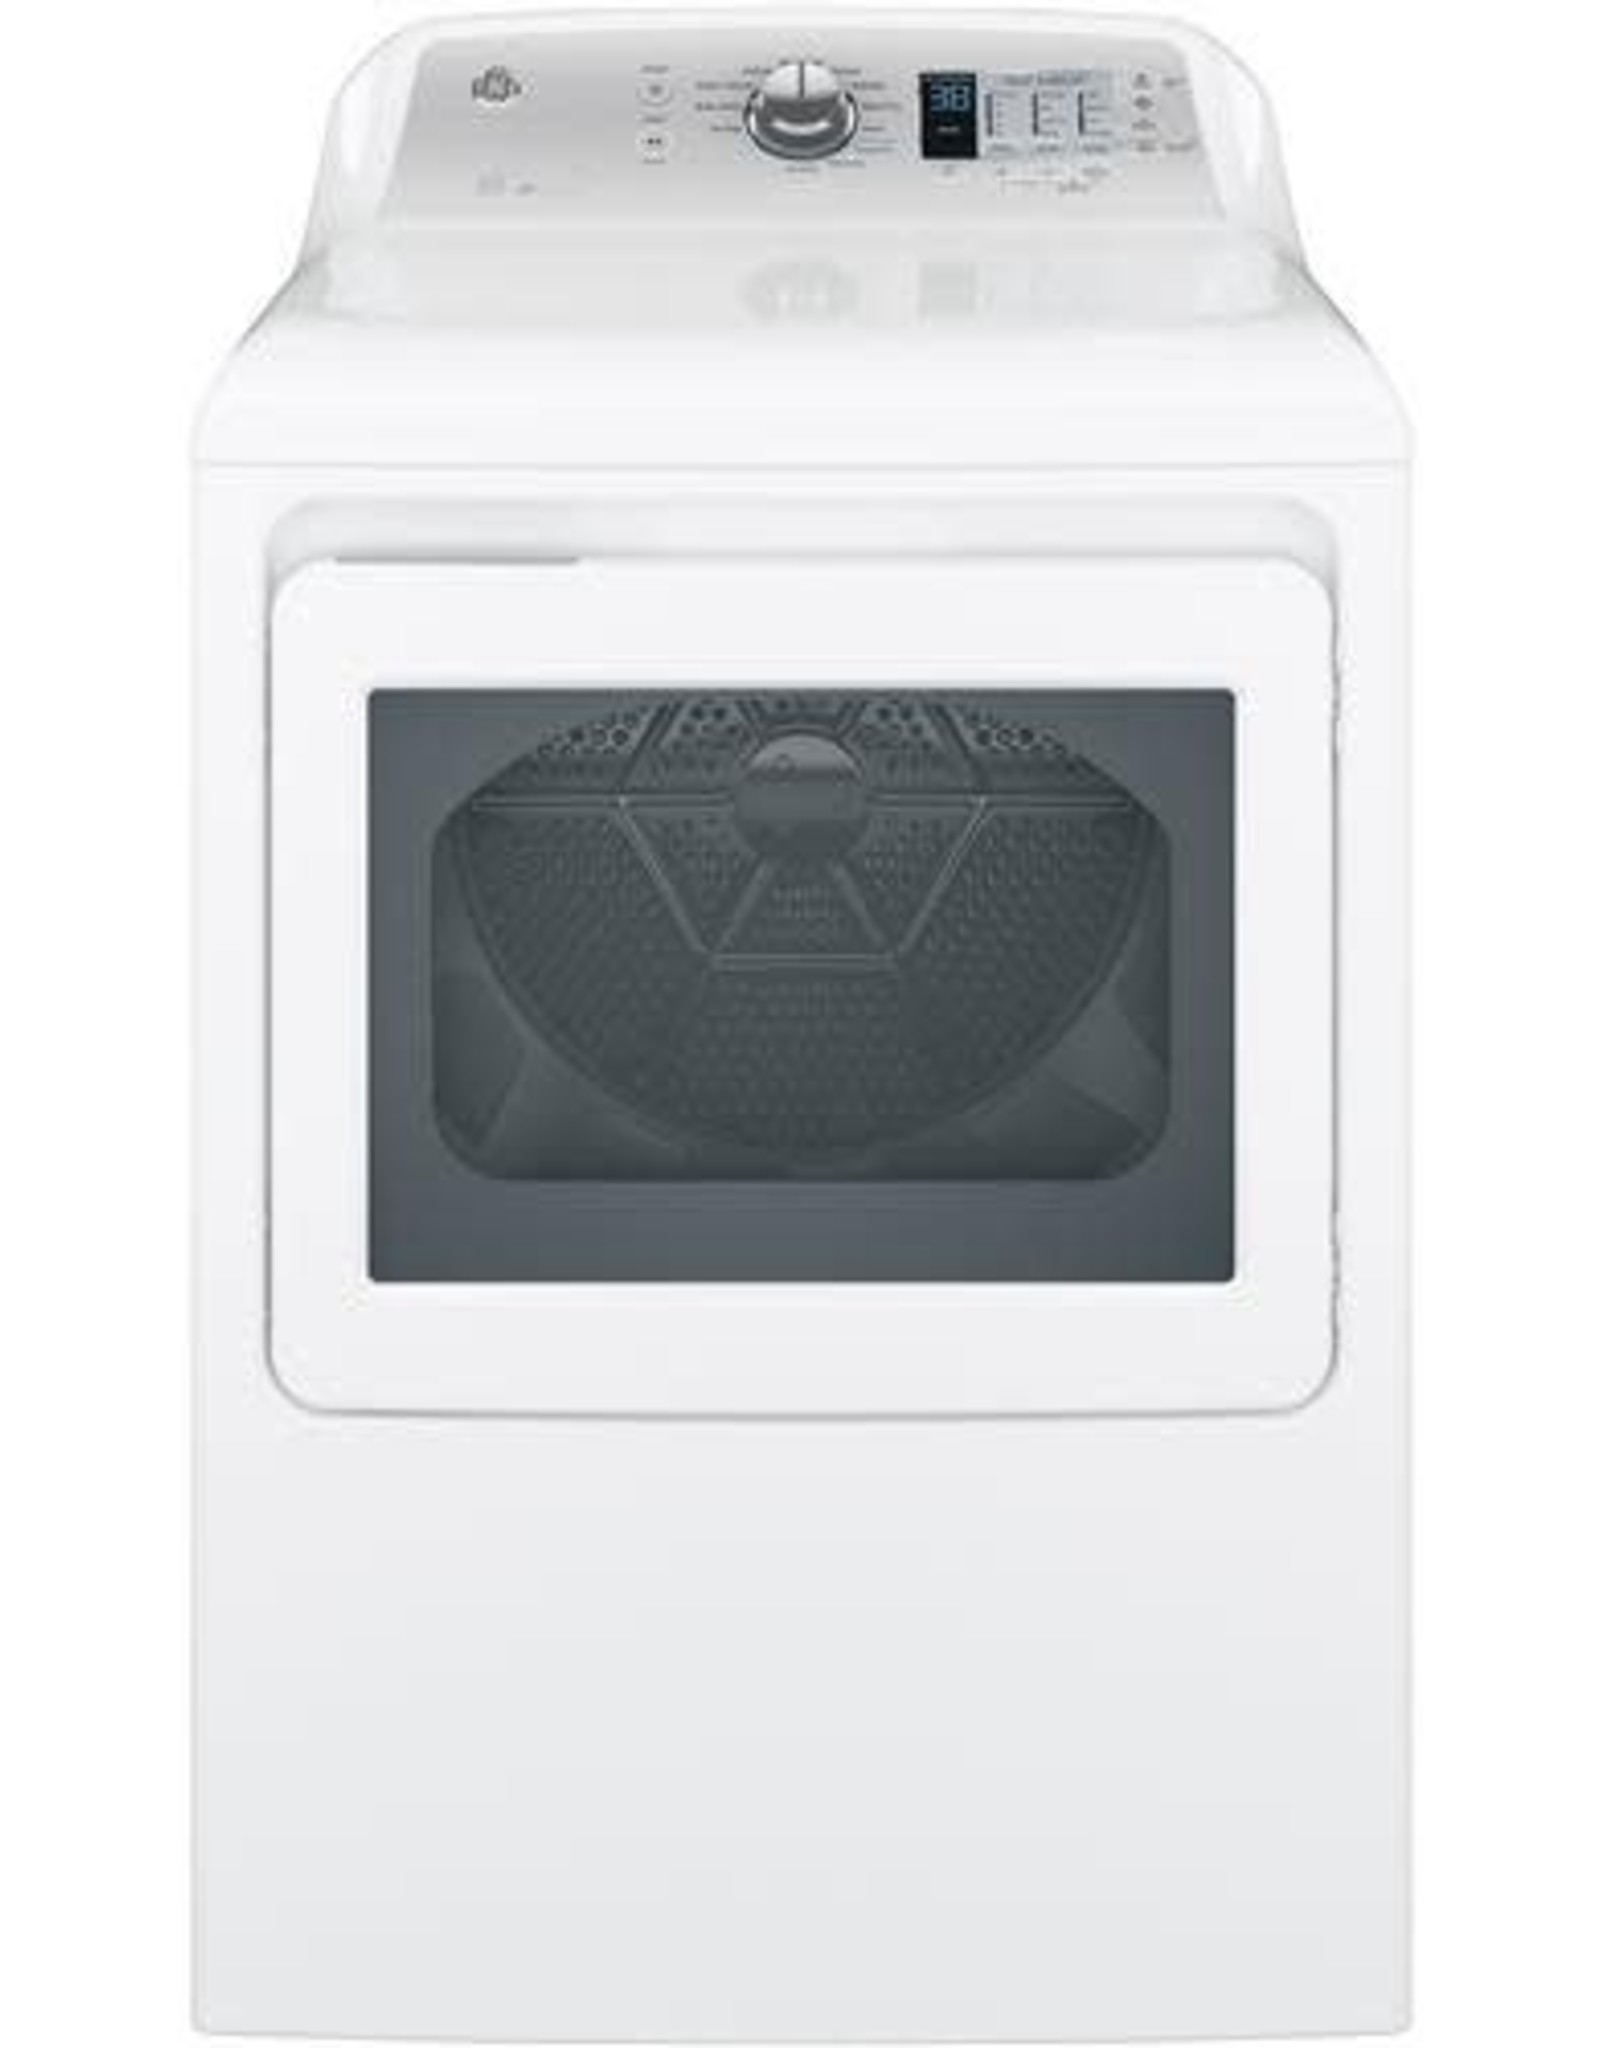 GE GE 7.4 Dryer White